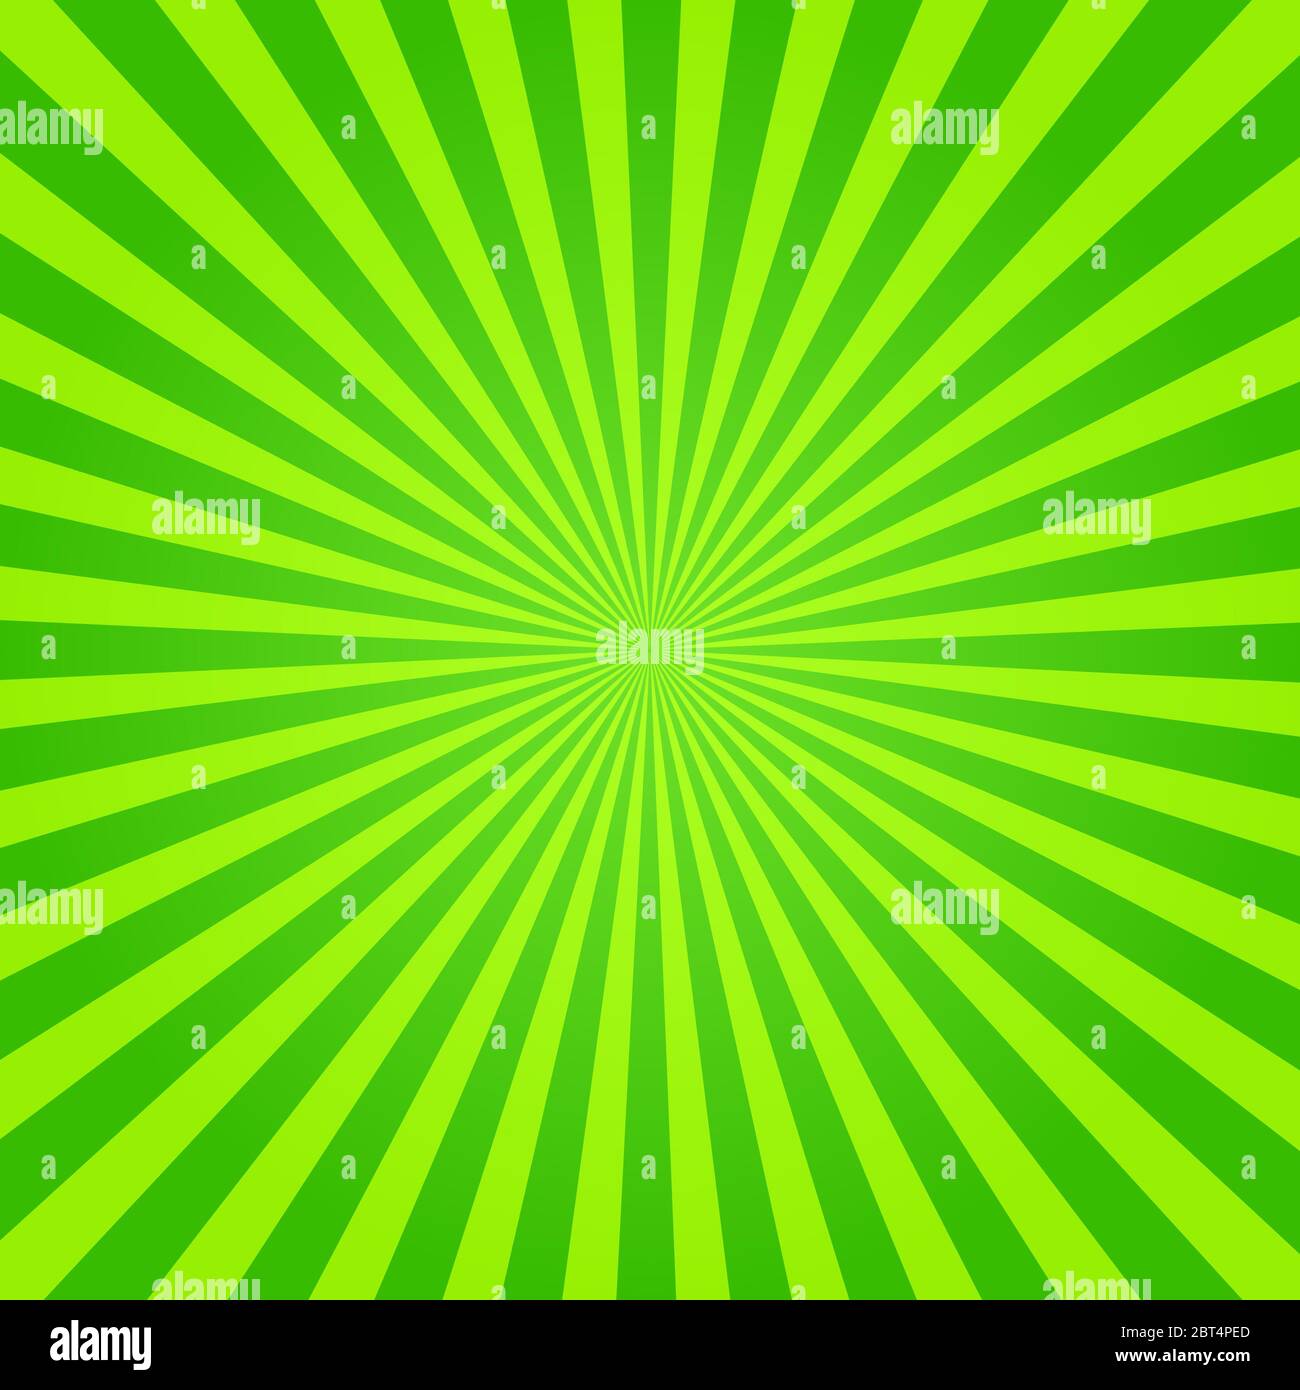 Green and Yellow Sunburst Stock Photo - Alamy